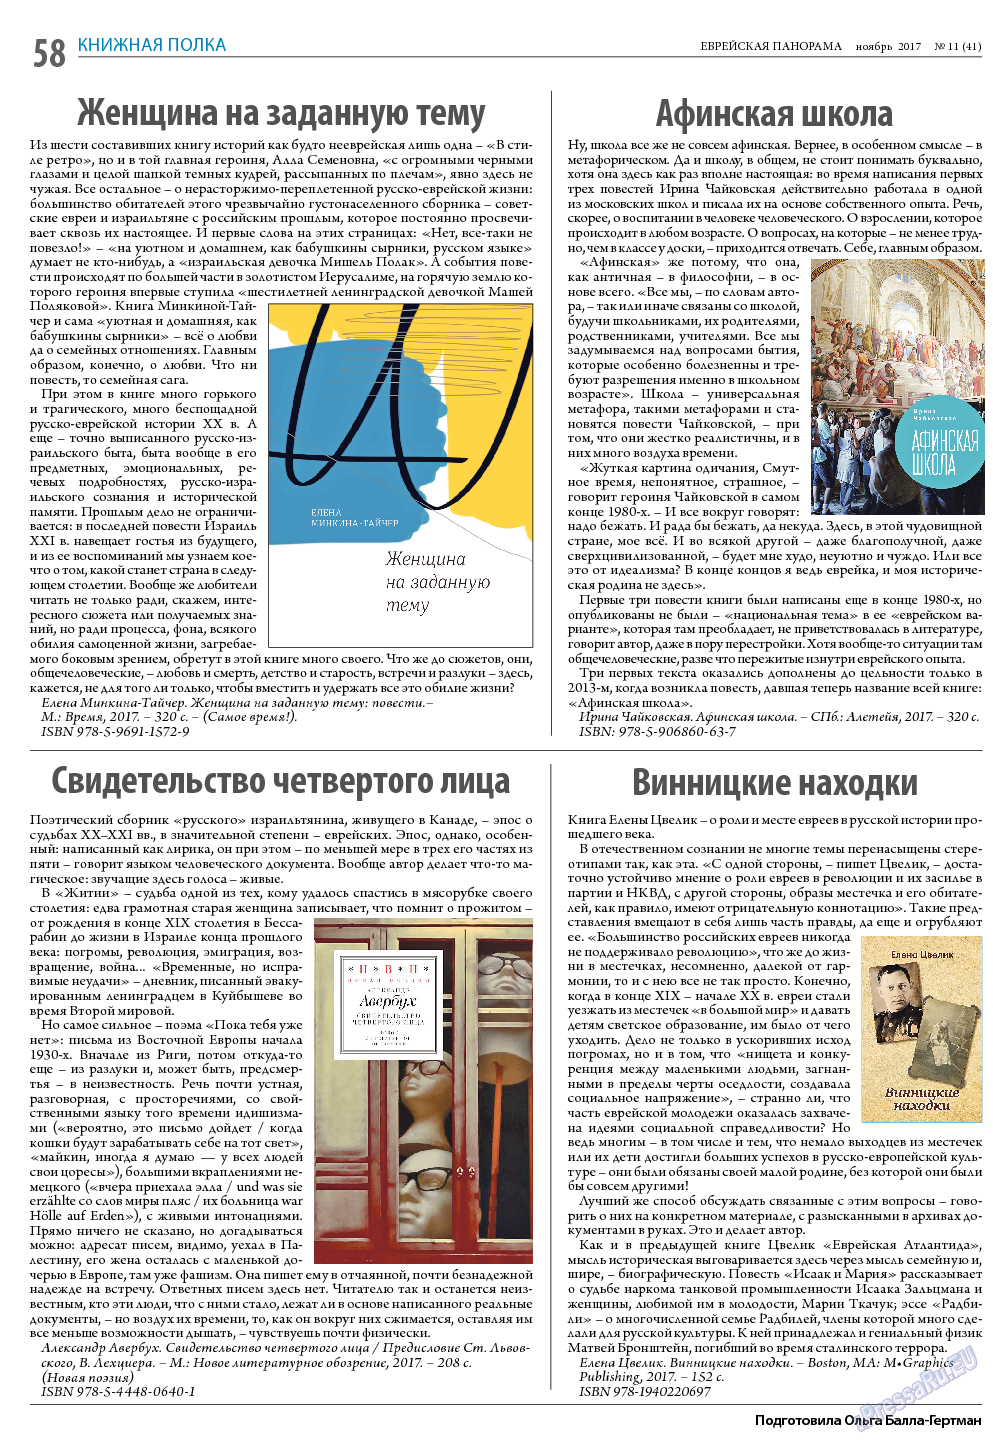 Еврейская панорама, газета. 2017 №11 стр.58